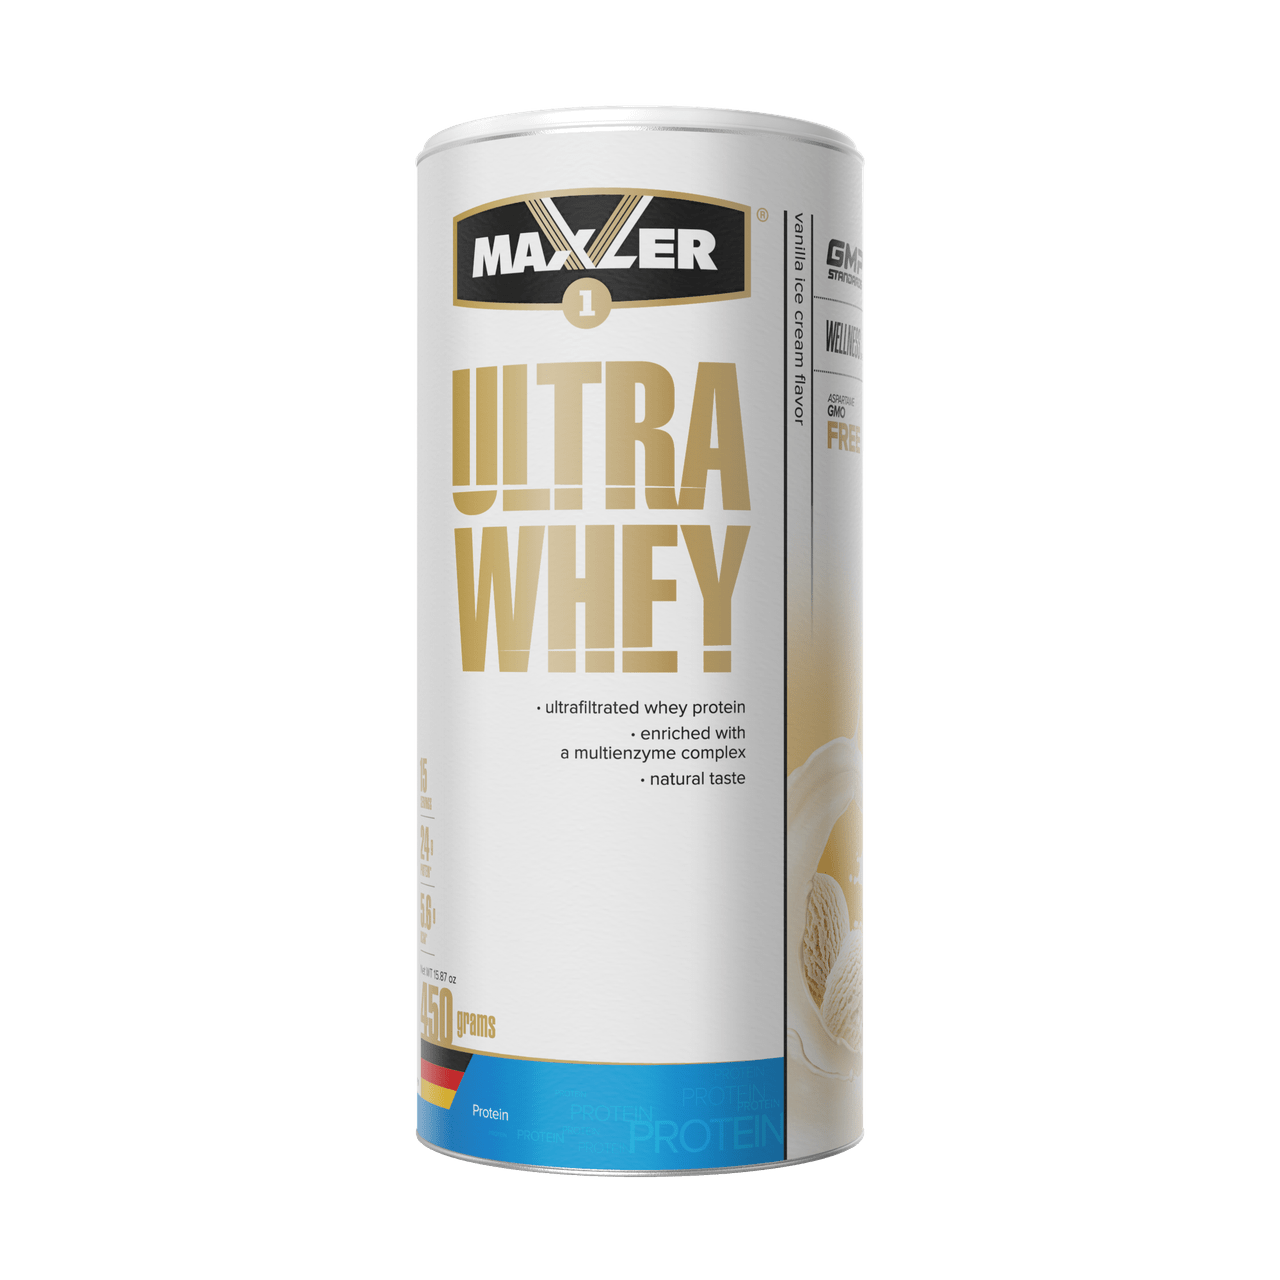 Комплексный протеин Maxler Ultra Whey (450 г) макслер vanilla ice cream,  мл, Maxler. Комплексный протеин. 